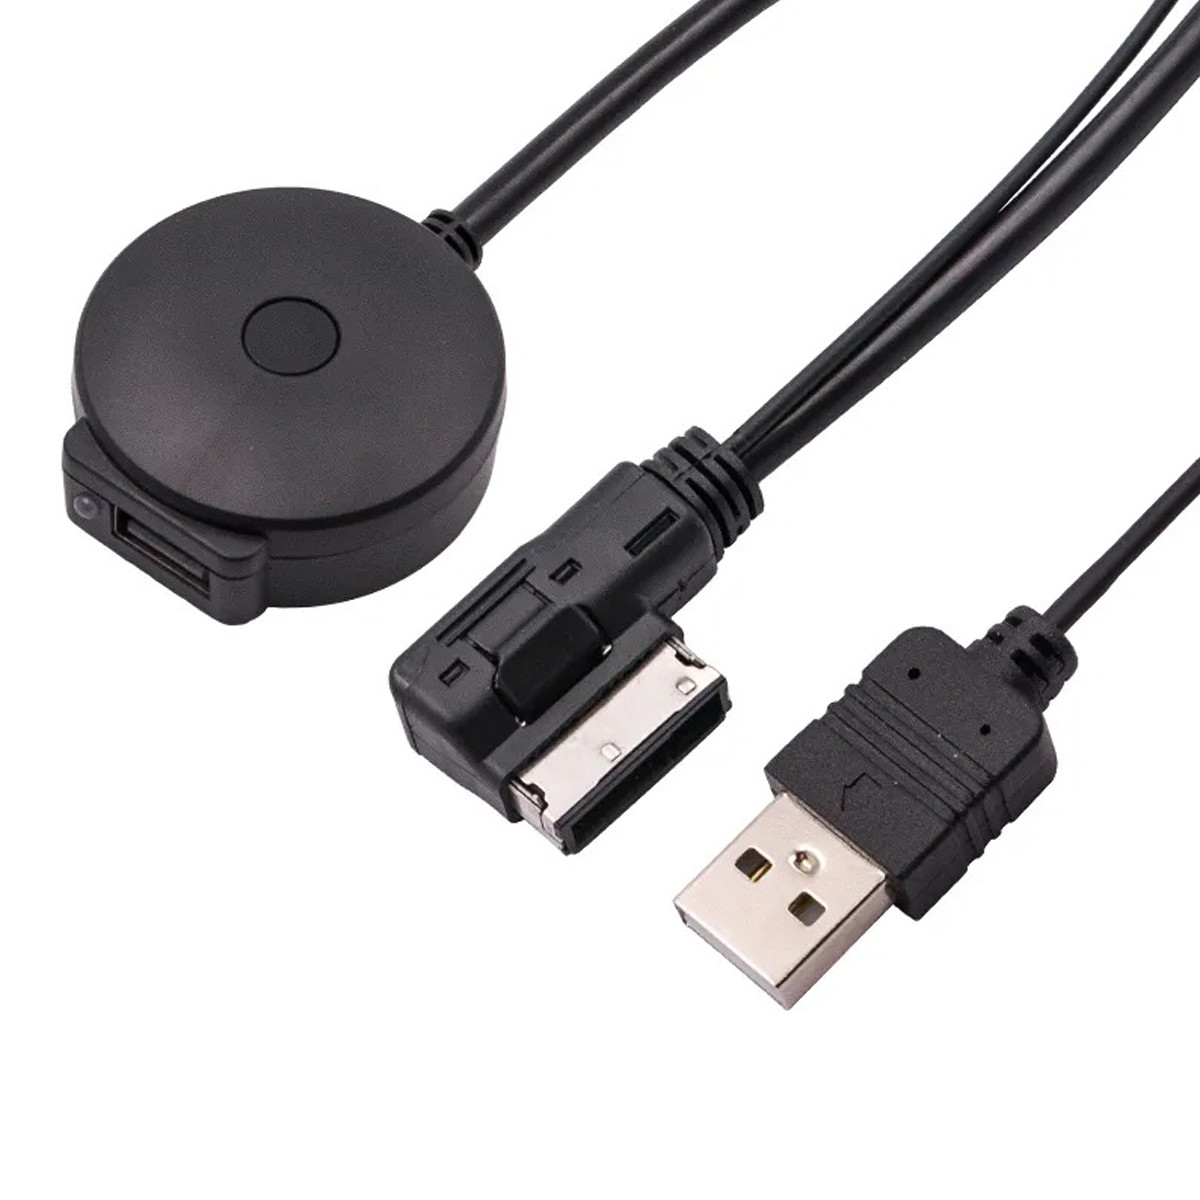 Bluetooth USB адаптер для Audi 2G [ЮСБ + Блютуз MMI 2G ver.5.0]